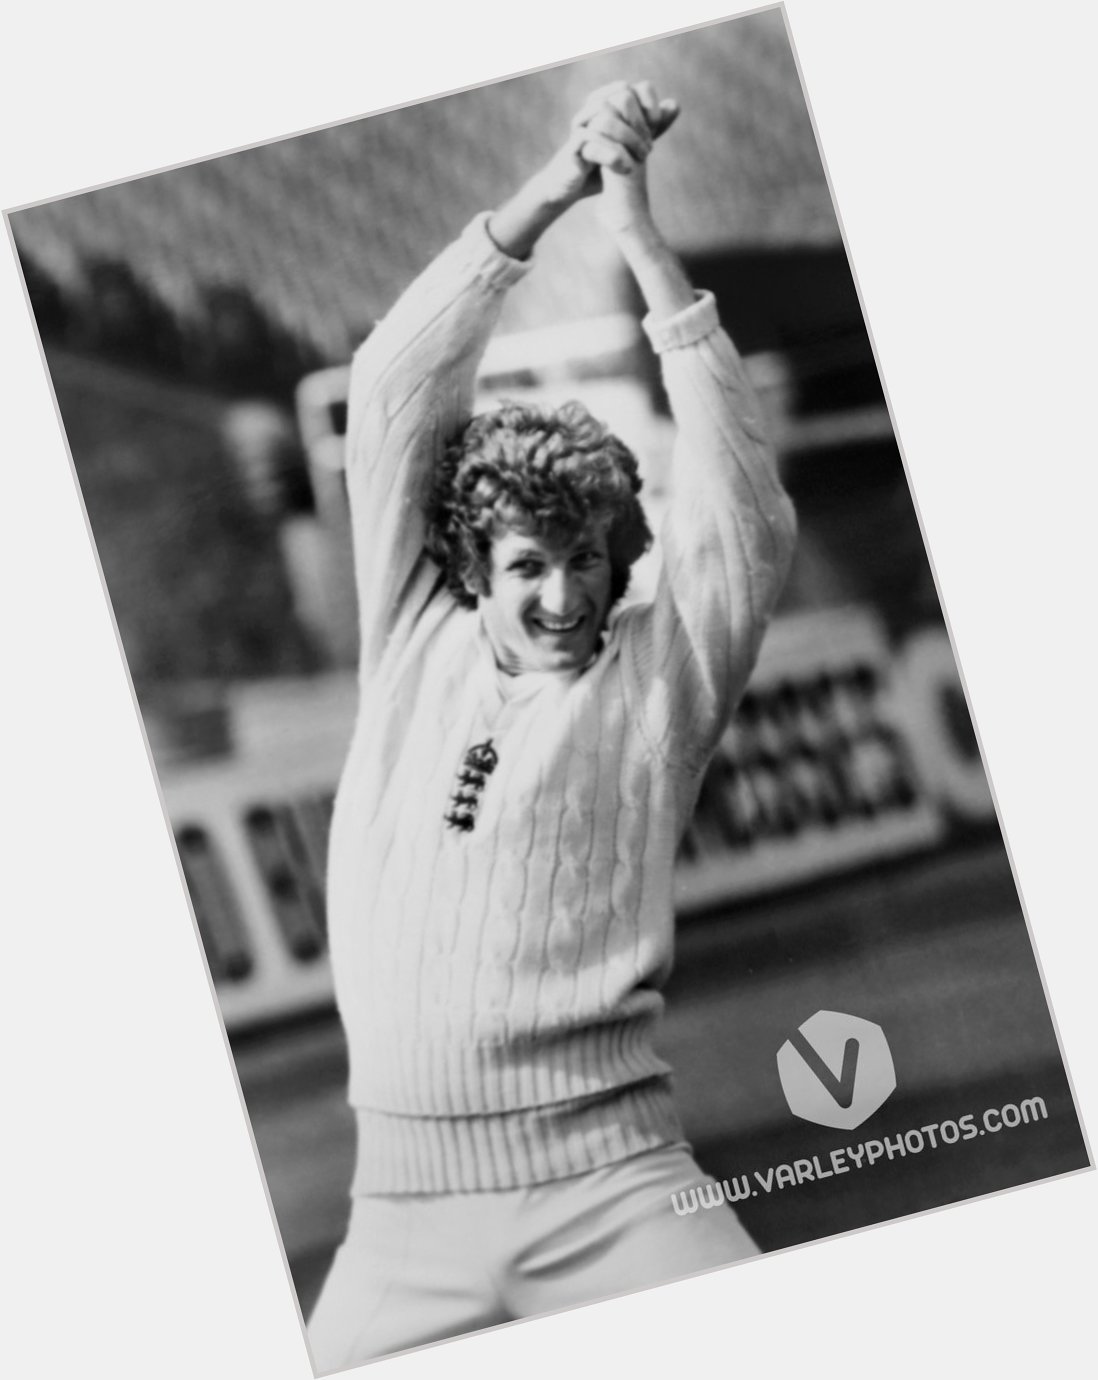 Happy 68th birthday to legendary fast bowler Bob Willis. 